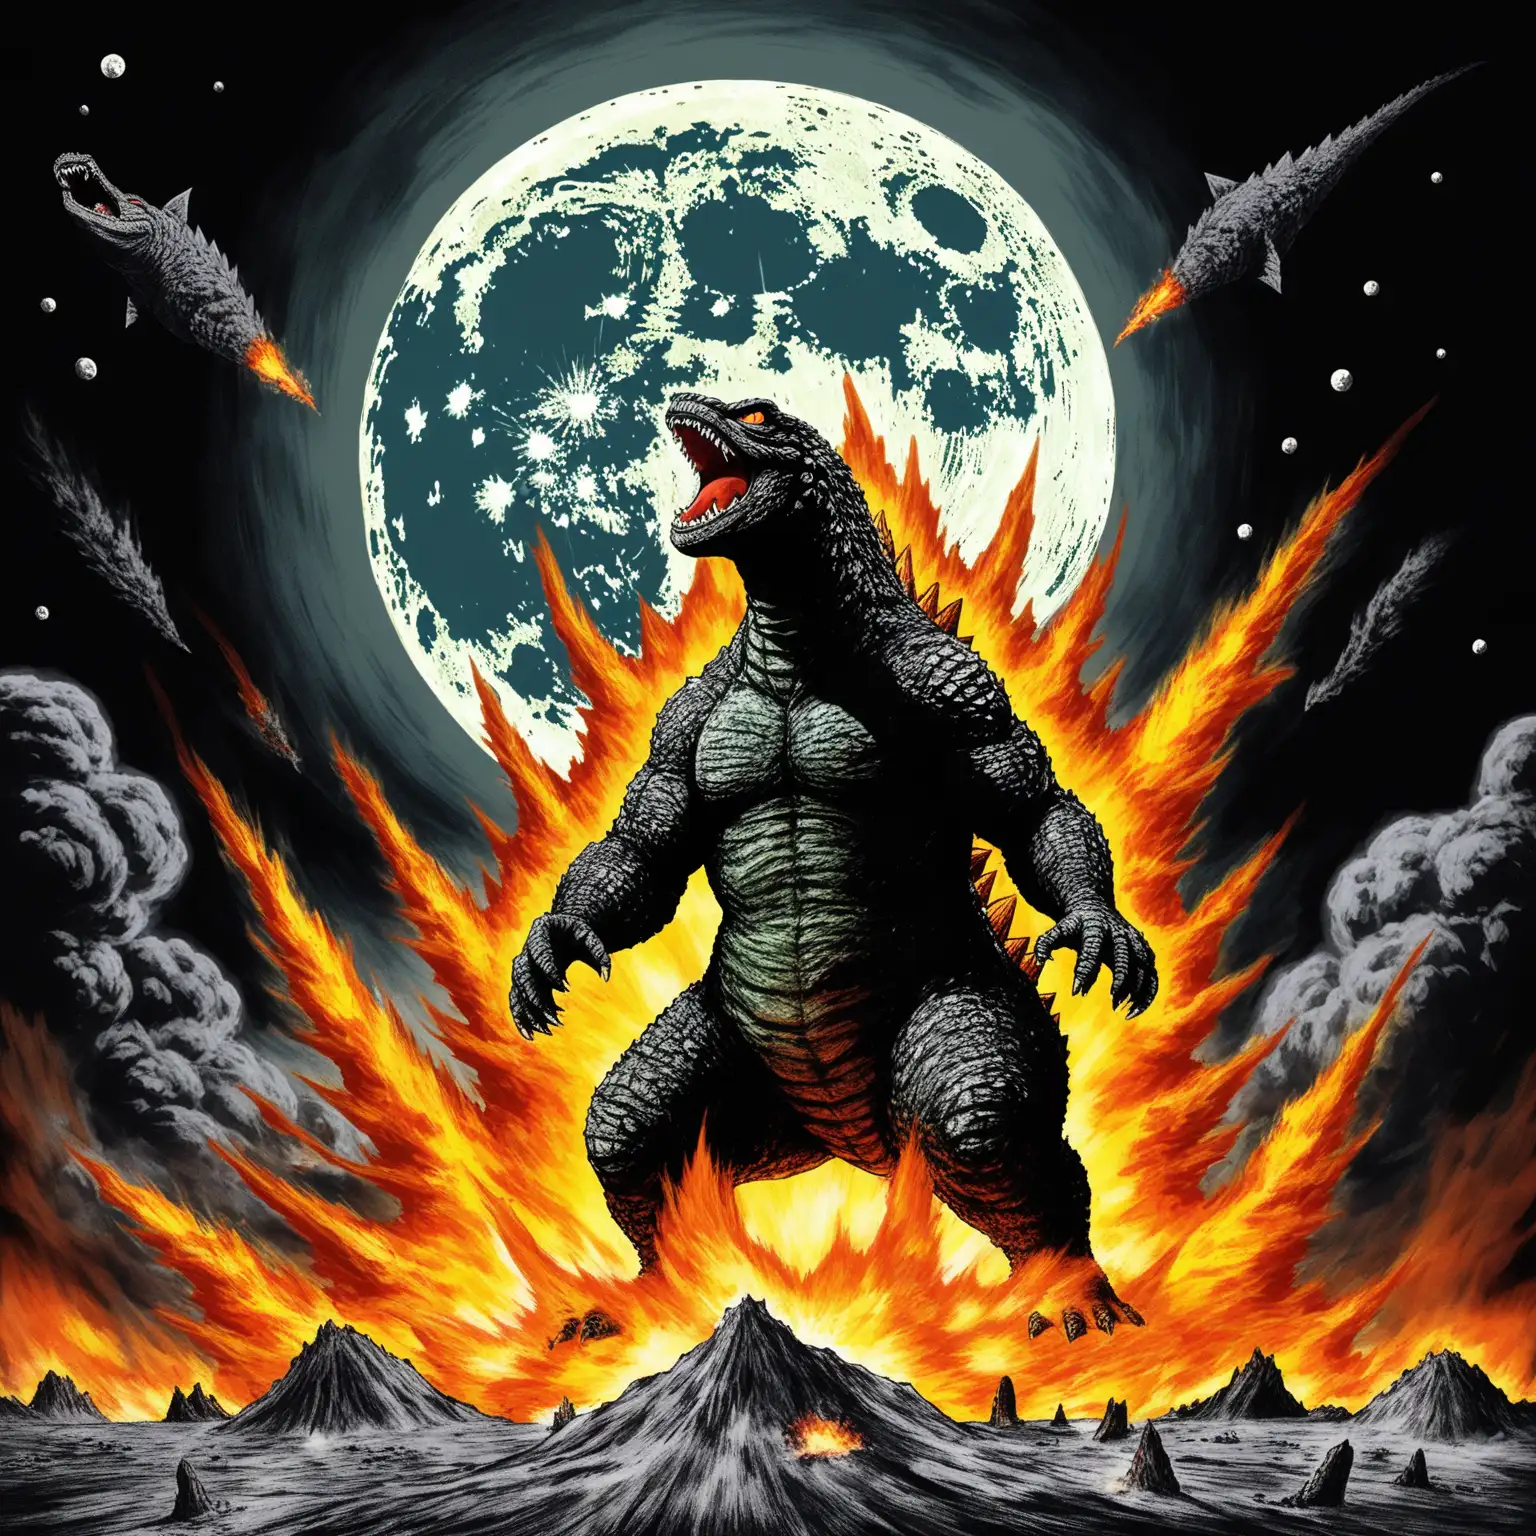 Godzilla Breathing Nuclear Fire on the Moon